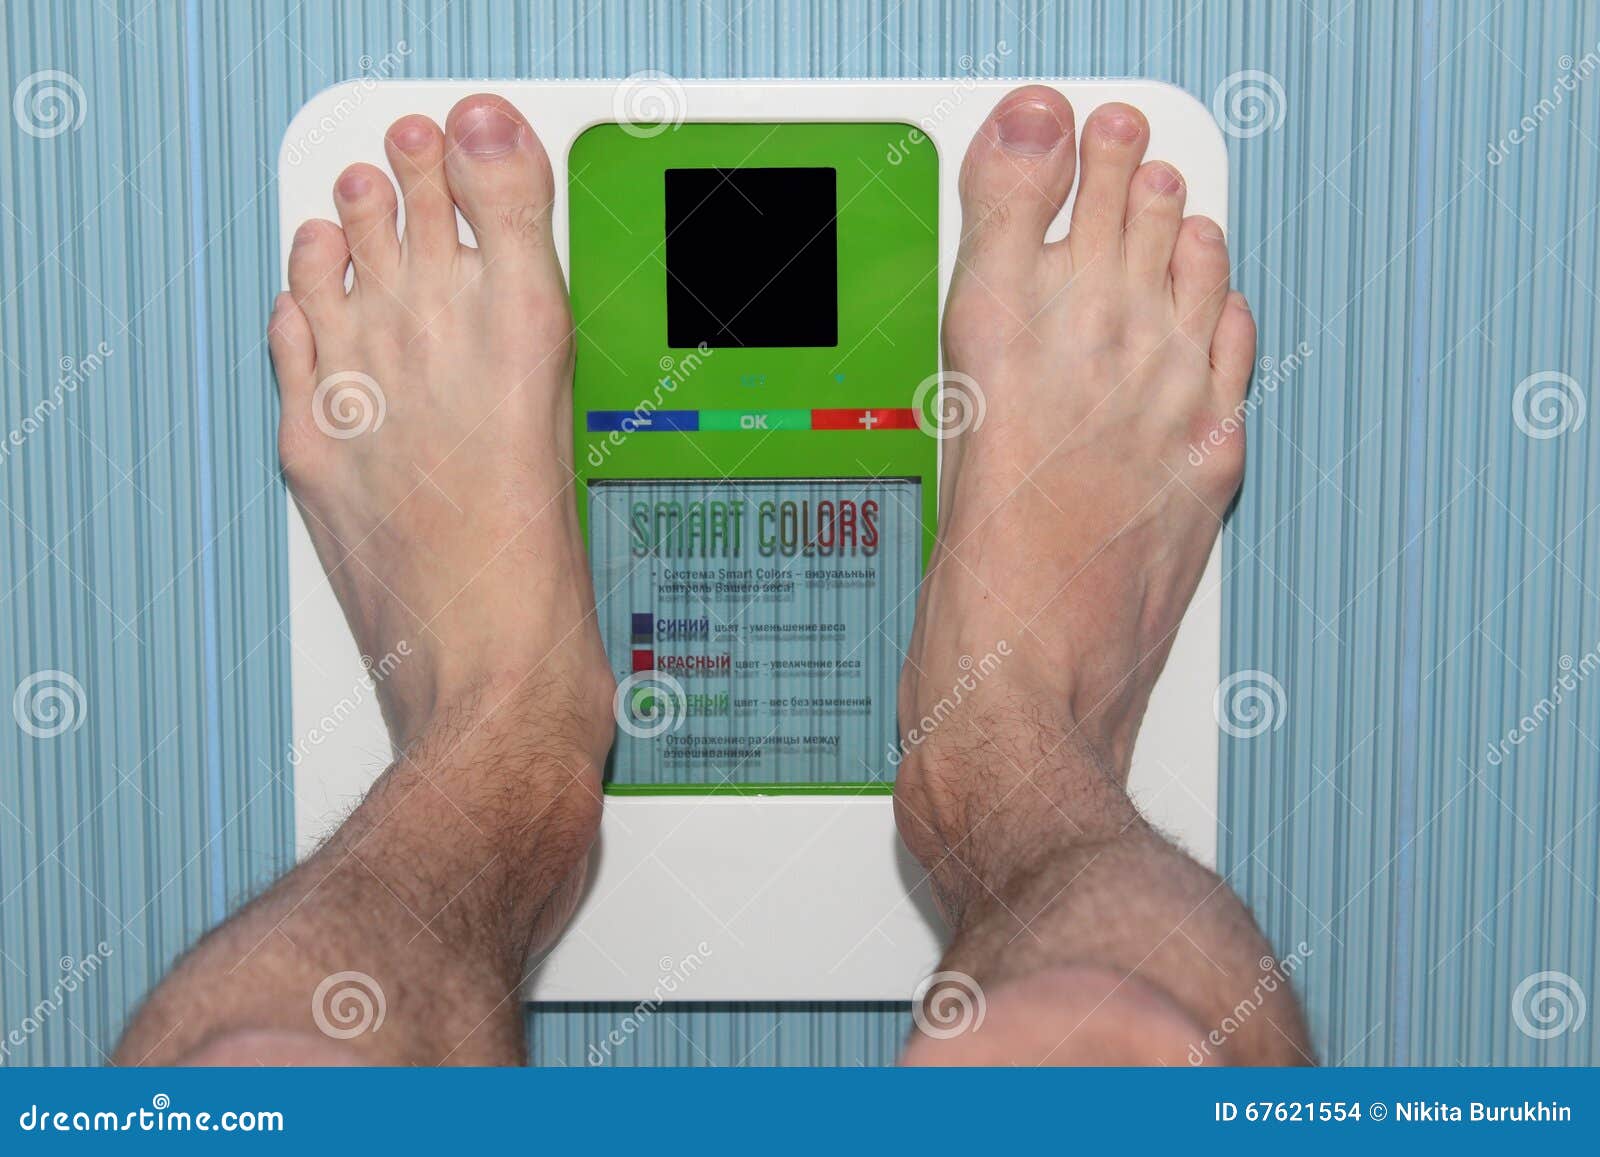 Вес ноги мужчины. Ноги на весах. Мужские ноги на весах. Ноги на электронных весах. Напольные весы электронные с ногами.